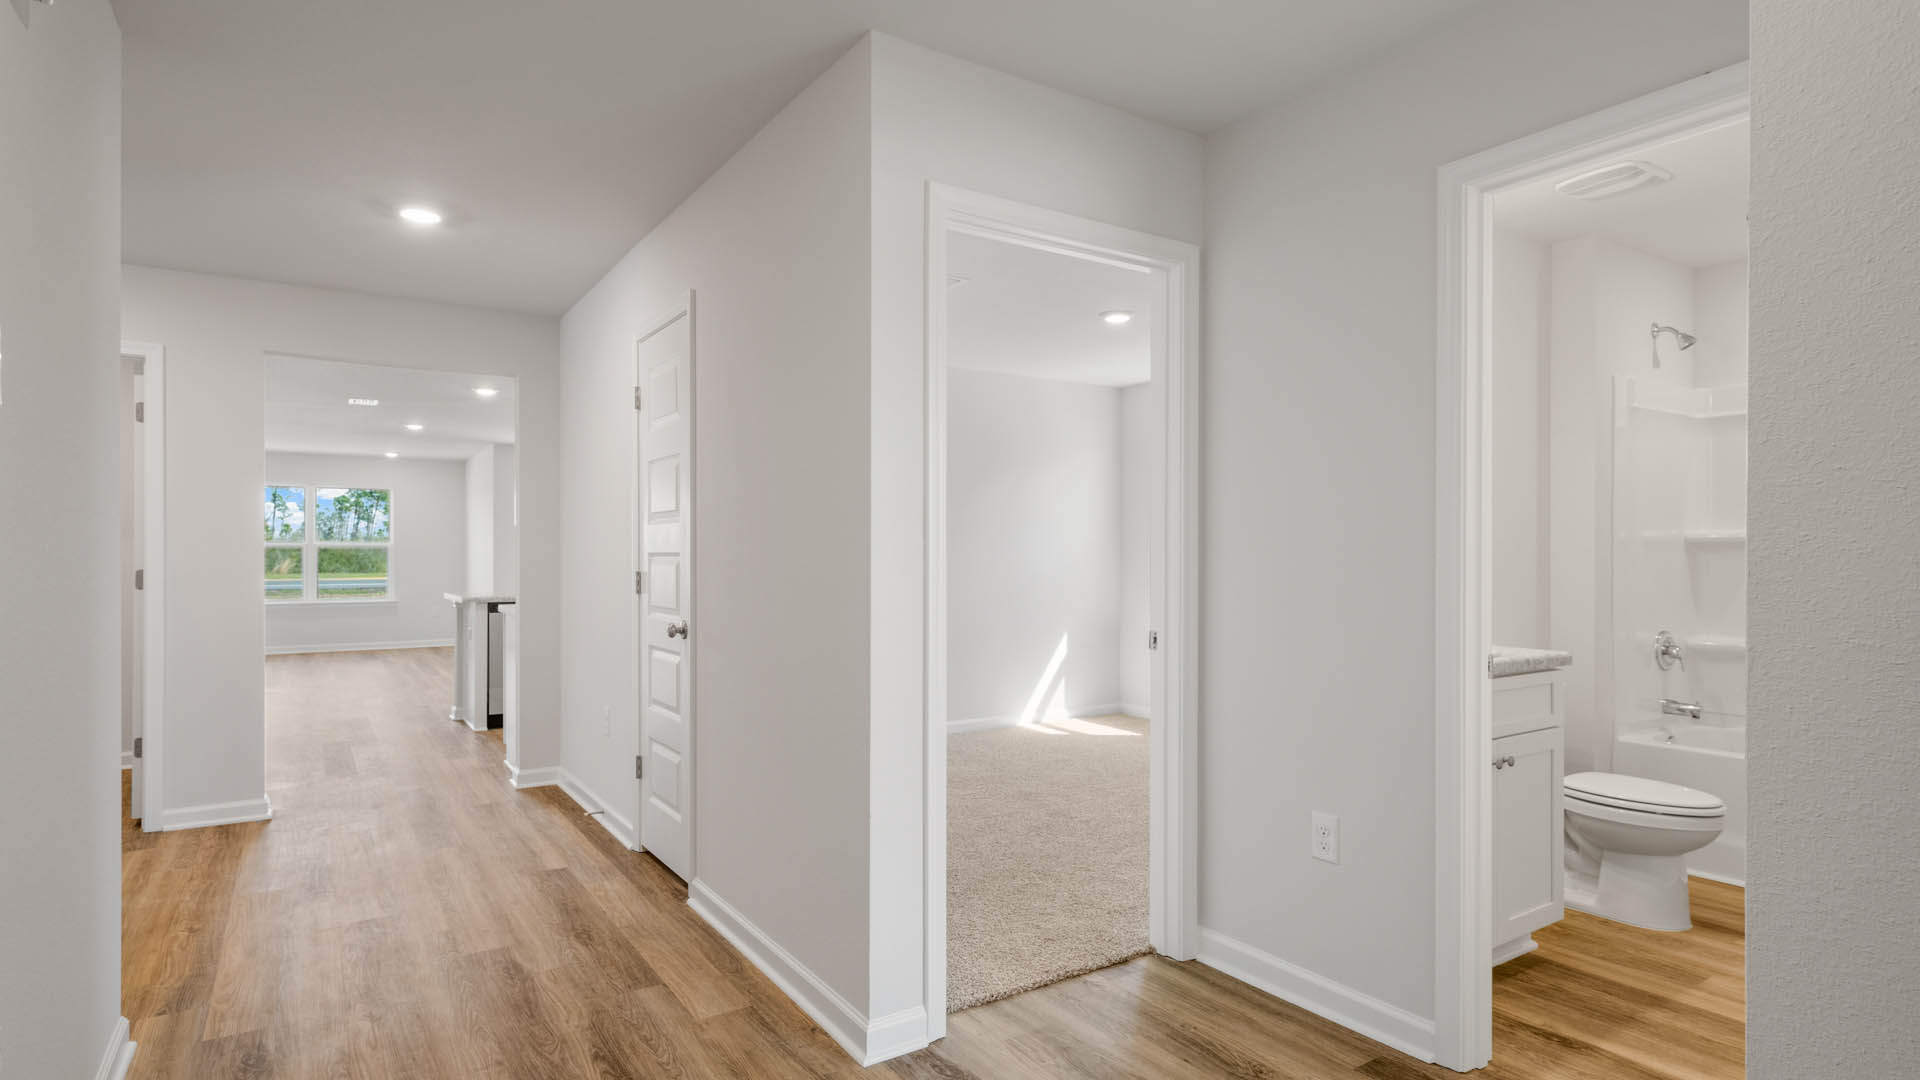 Hallway by bedroom and bathroom with EVP flooring.